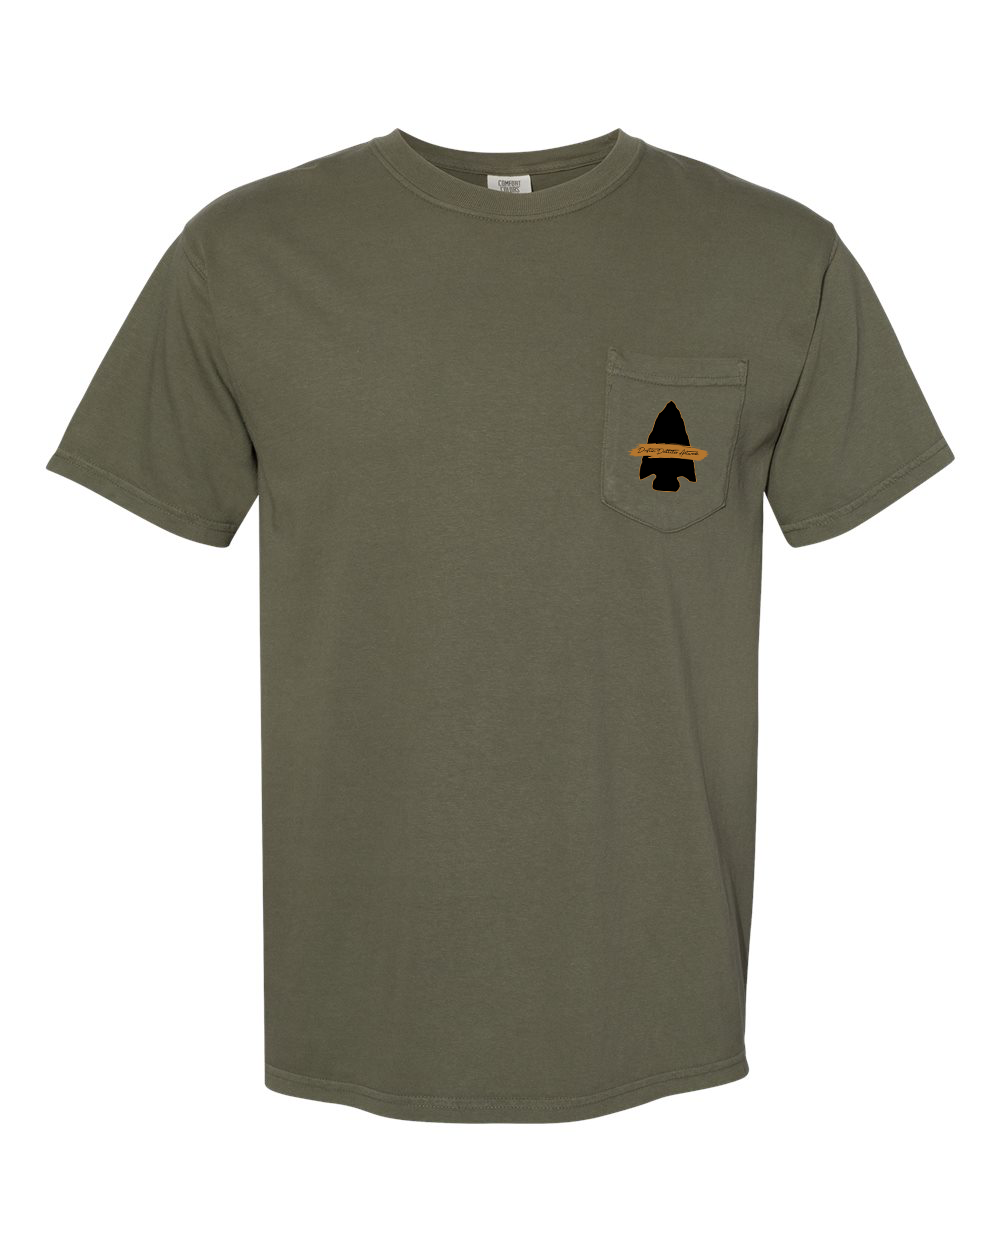 Hunting Shield Pocket T-Shirt - Pine S